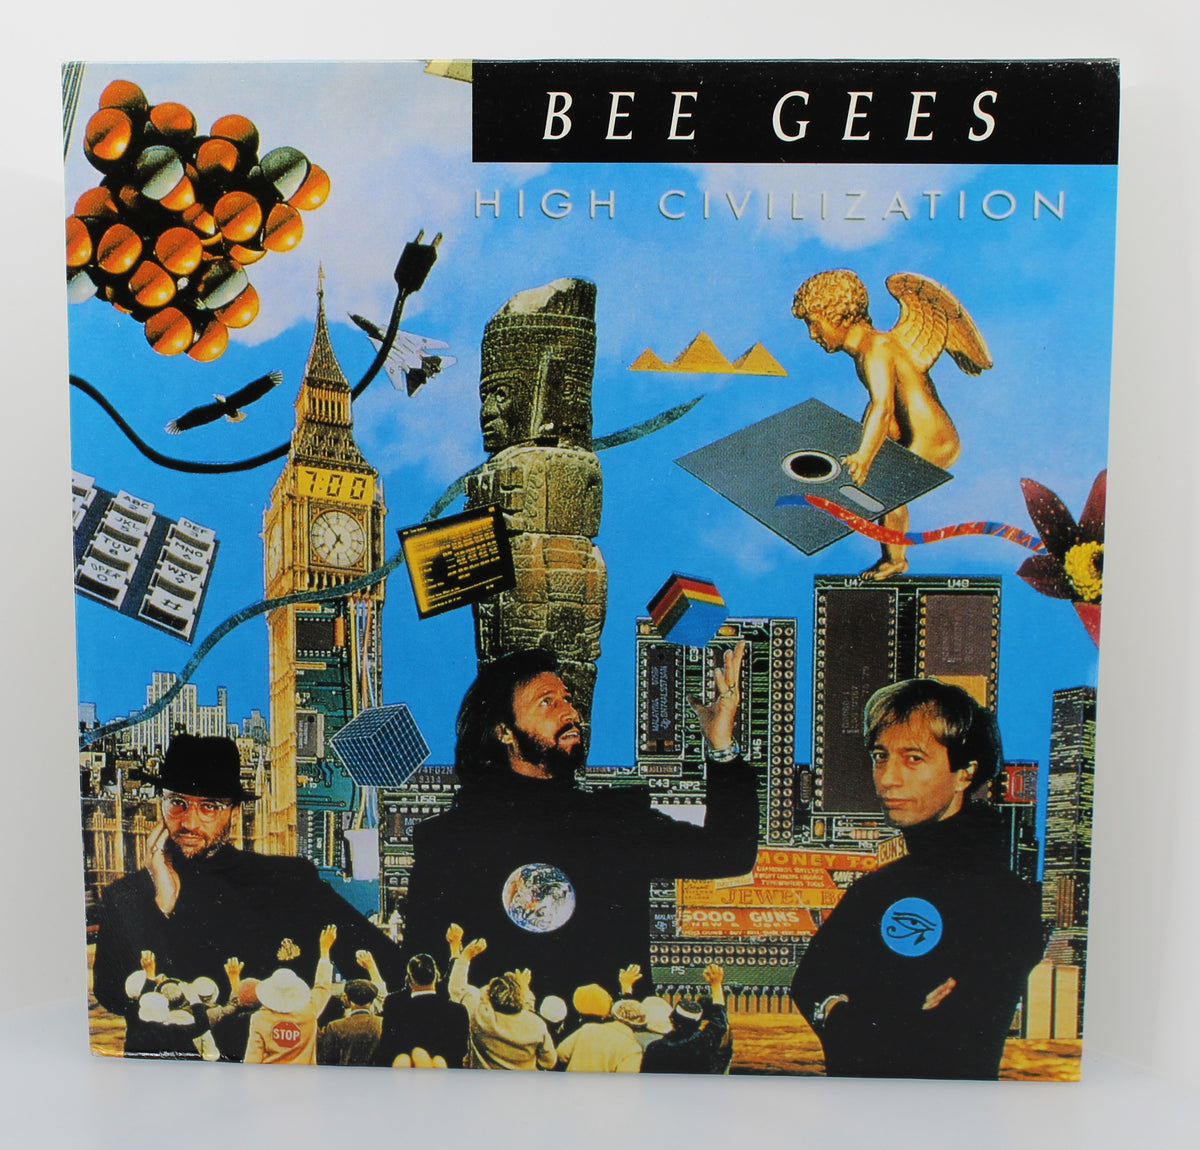 Bee Gees – High Civilization, Vinyl, LP, Album, South Korea 1991